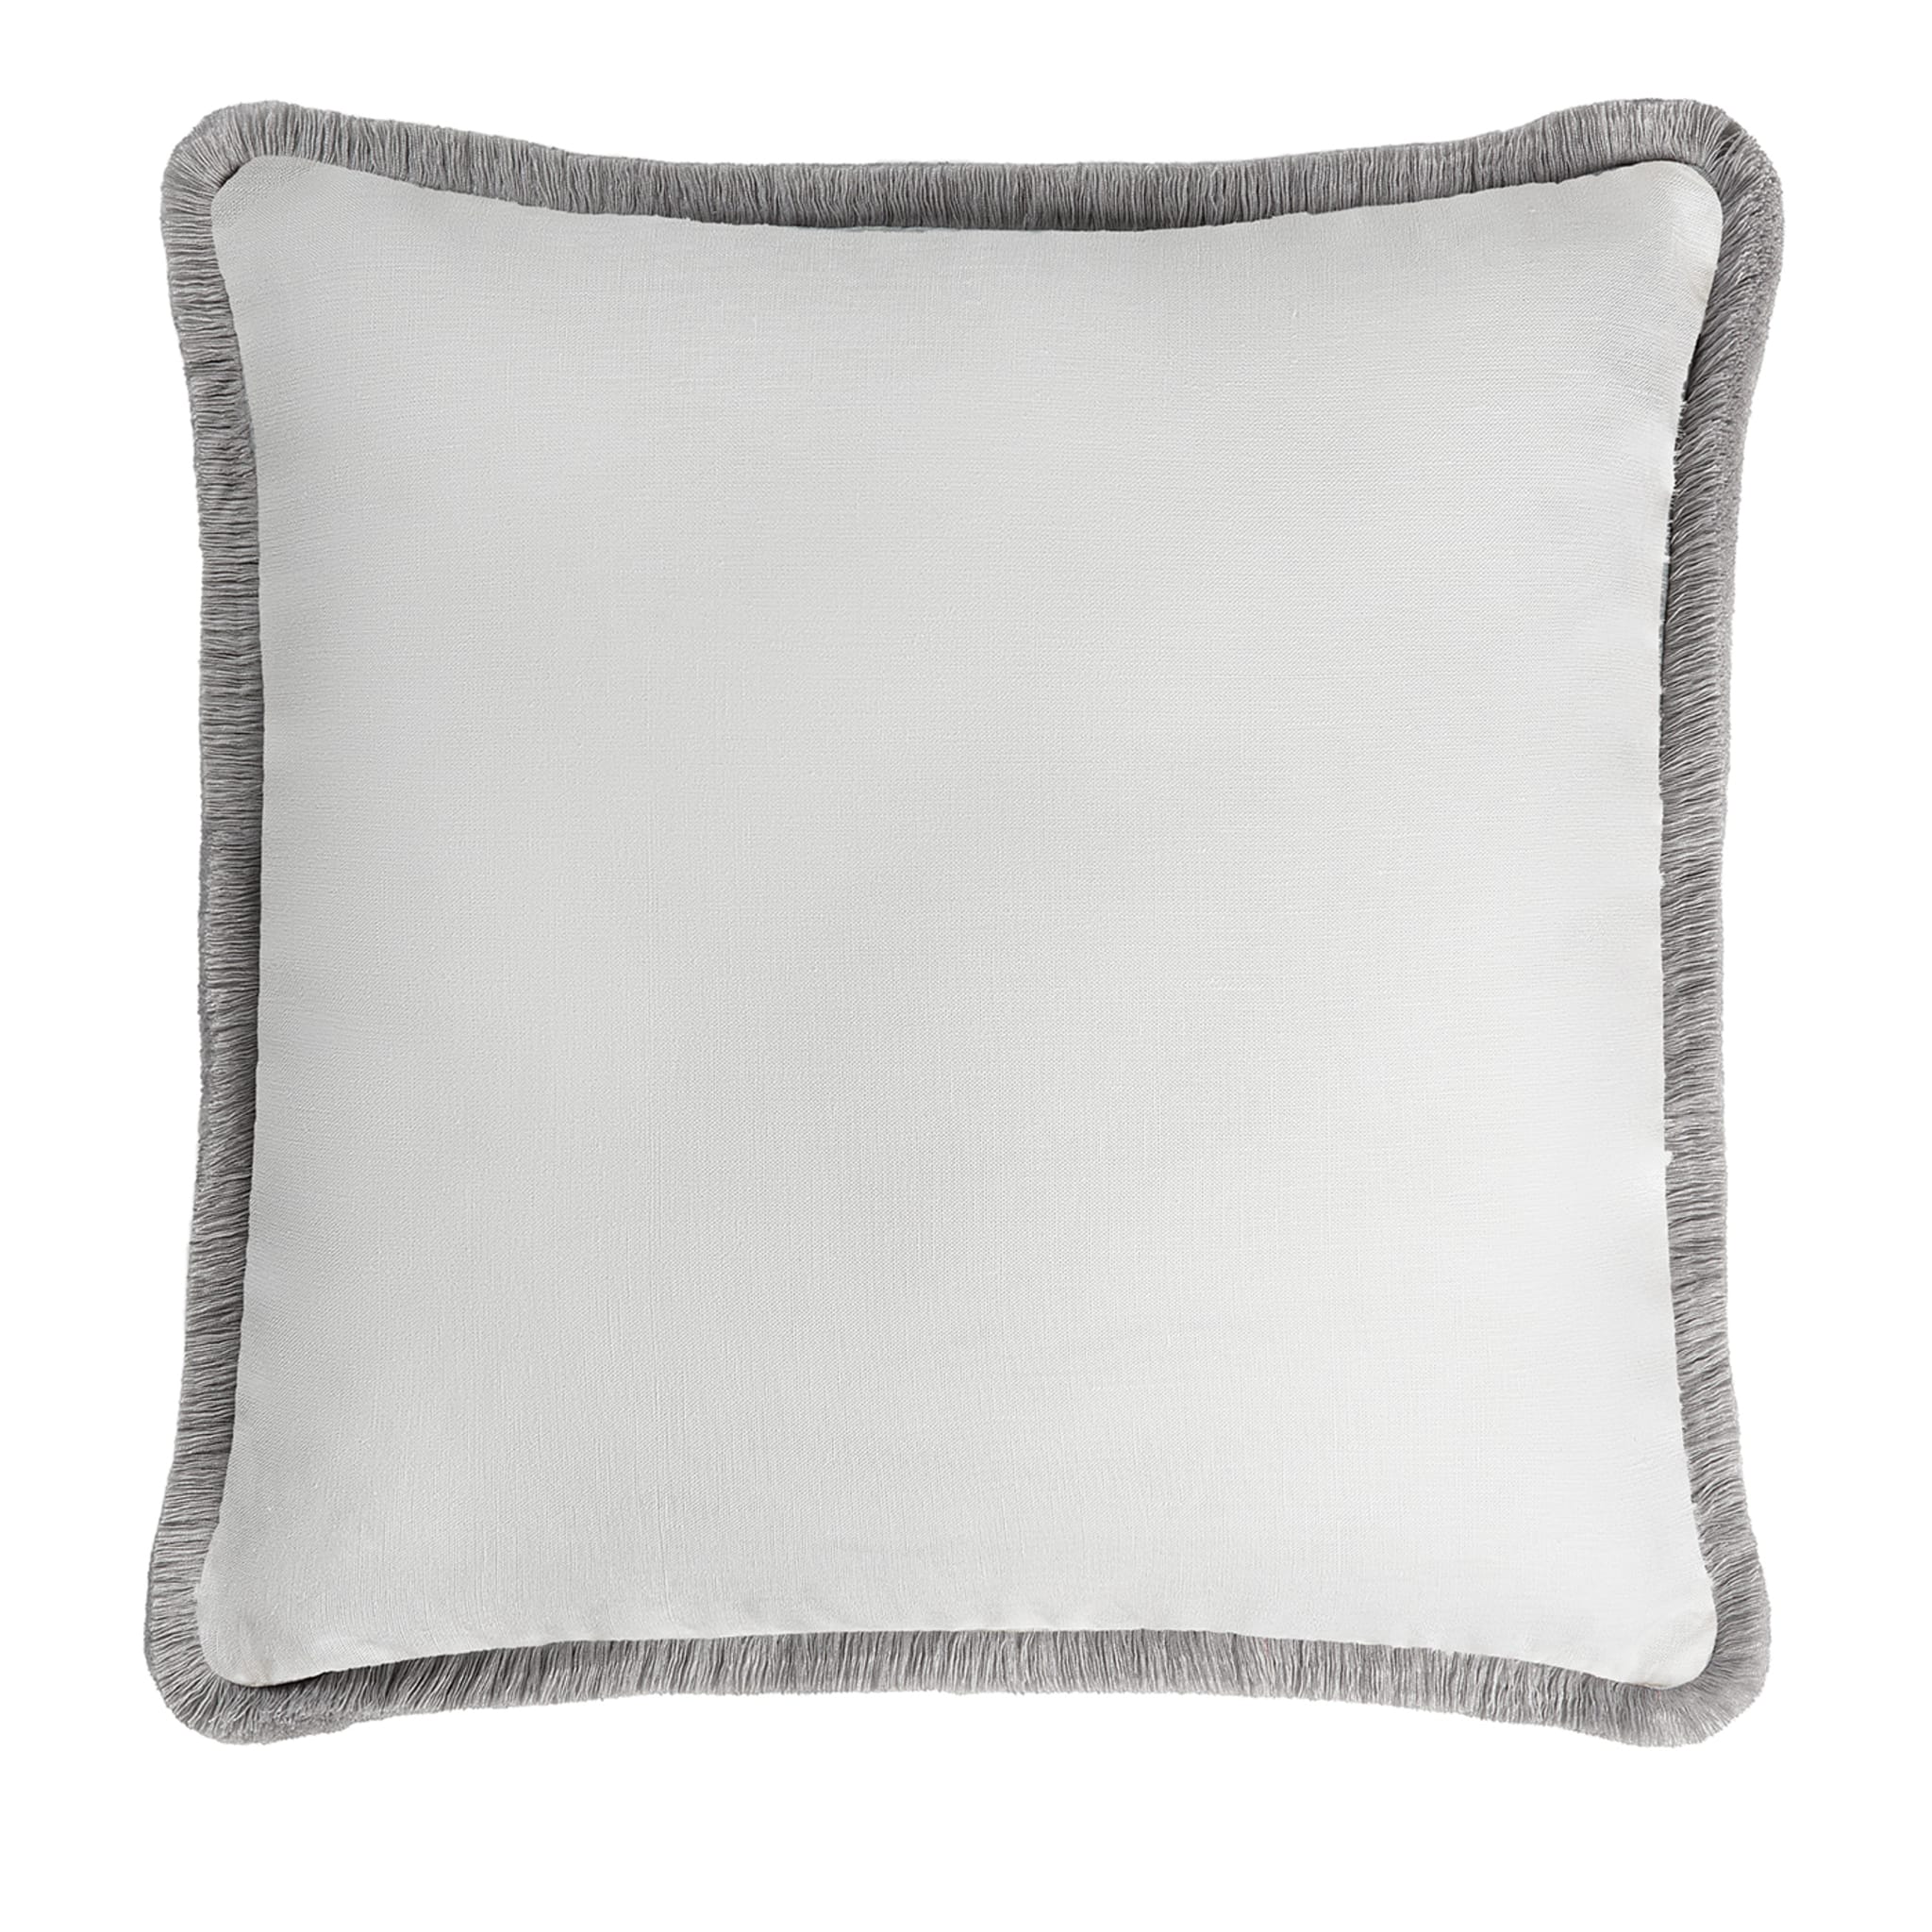 Cuscino in lino Happy bianco con frange grigie - Vista principale